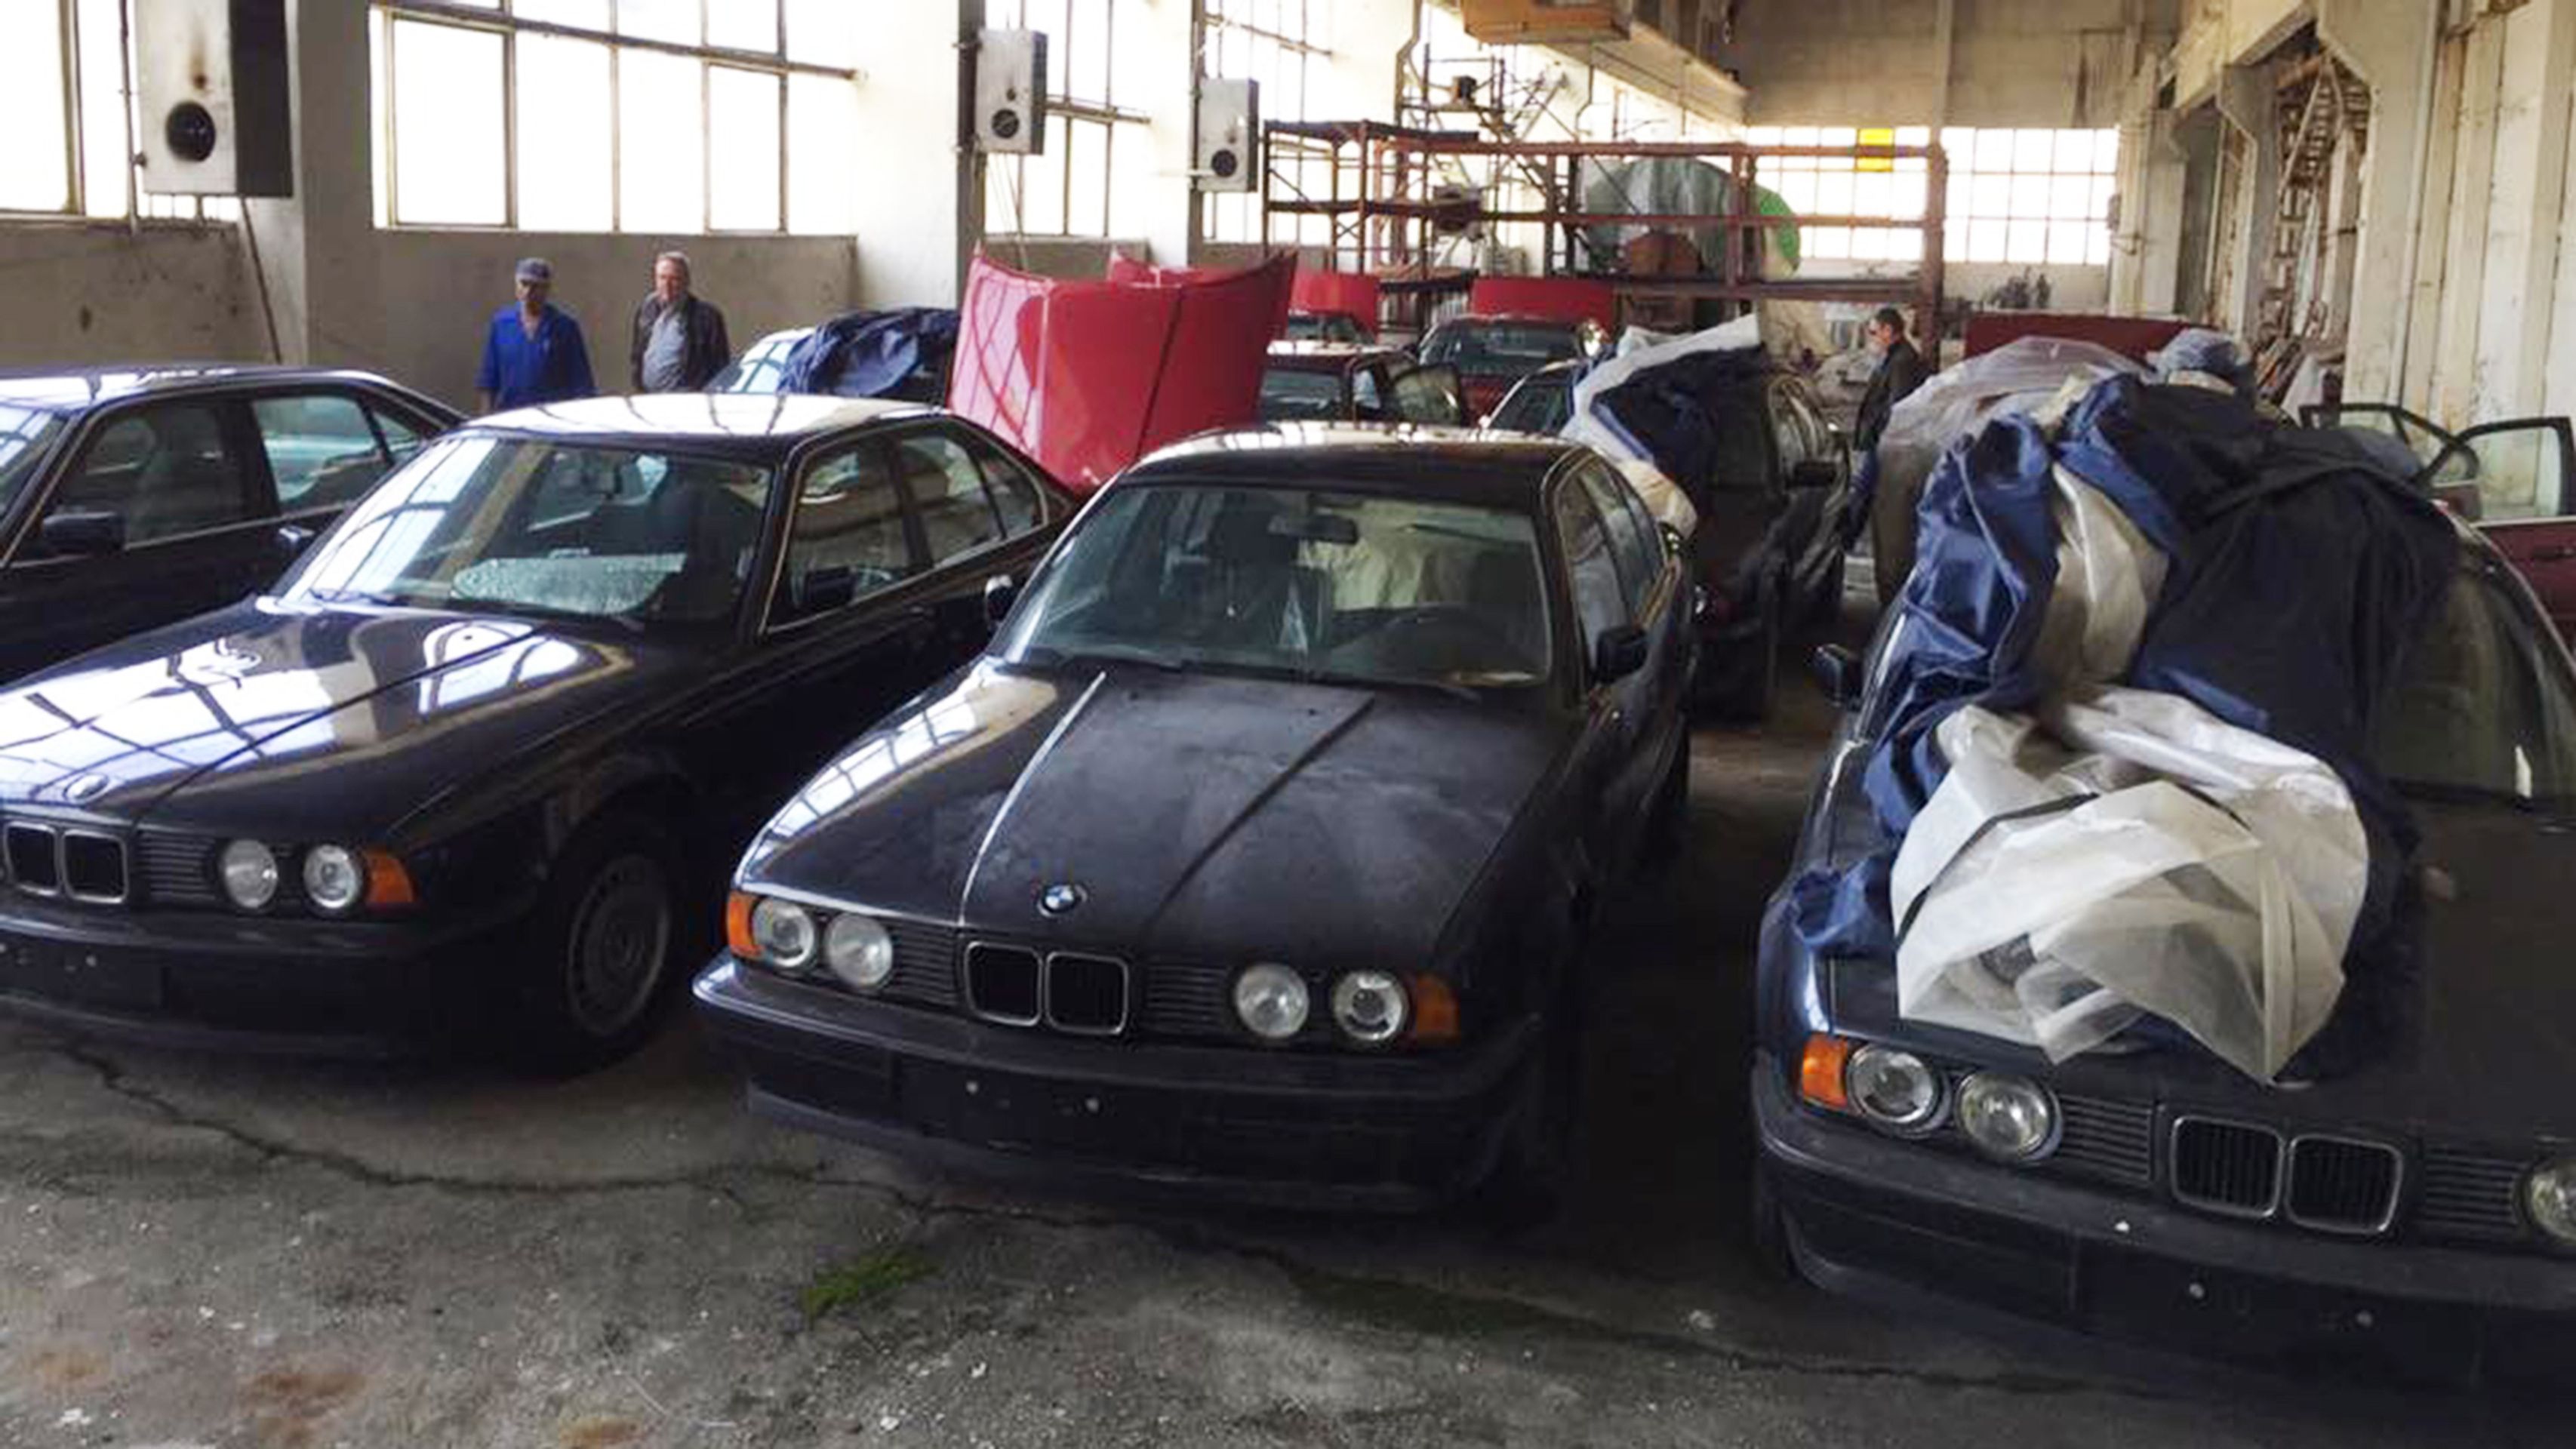 Sklad 25 let ukrýval 11 vozů BMW řady 5 - 22 - Fotogalerie: V bulharském skladu se 25 let skrýval poklad (16/16)